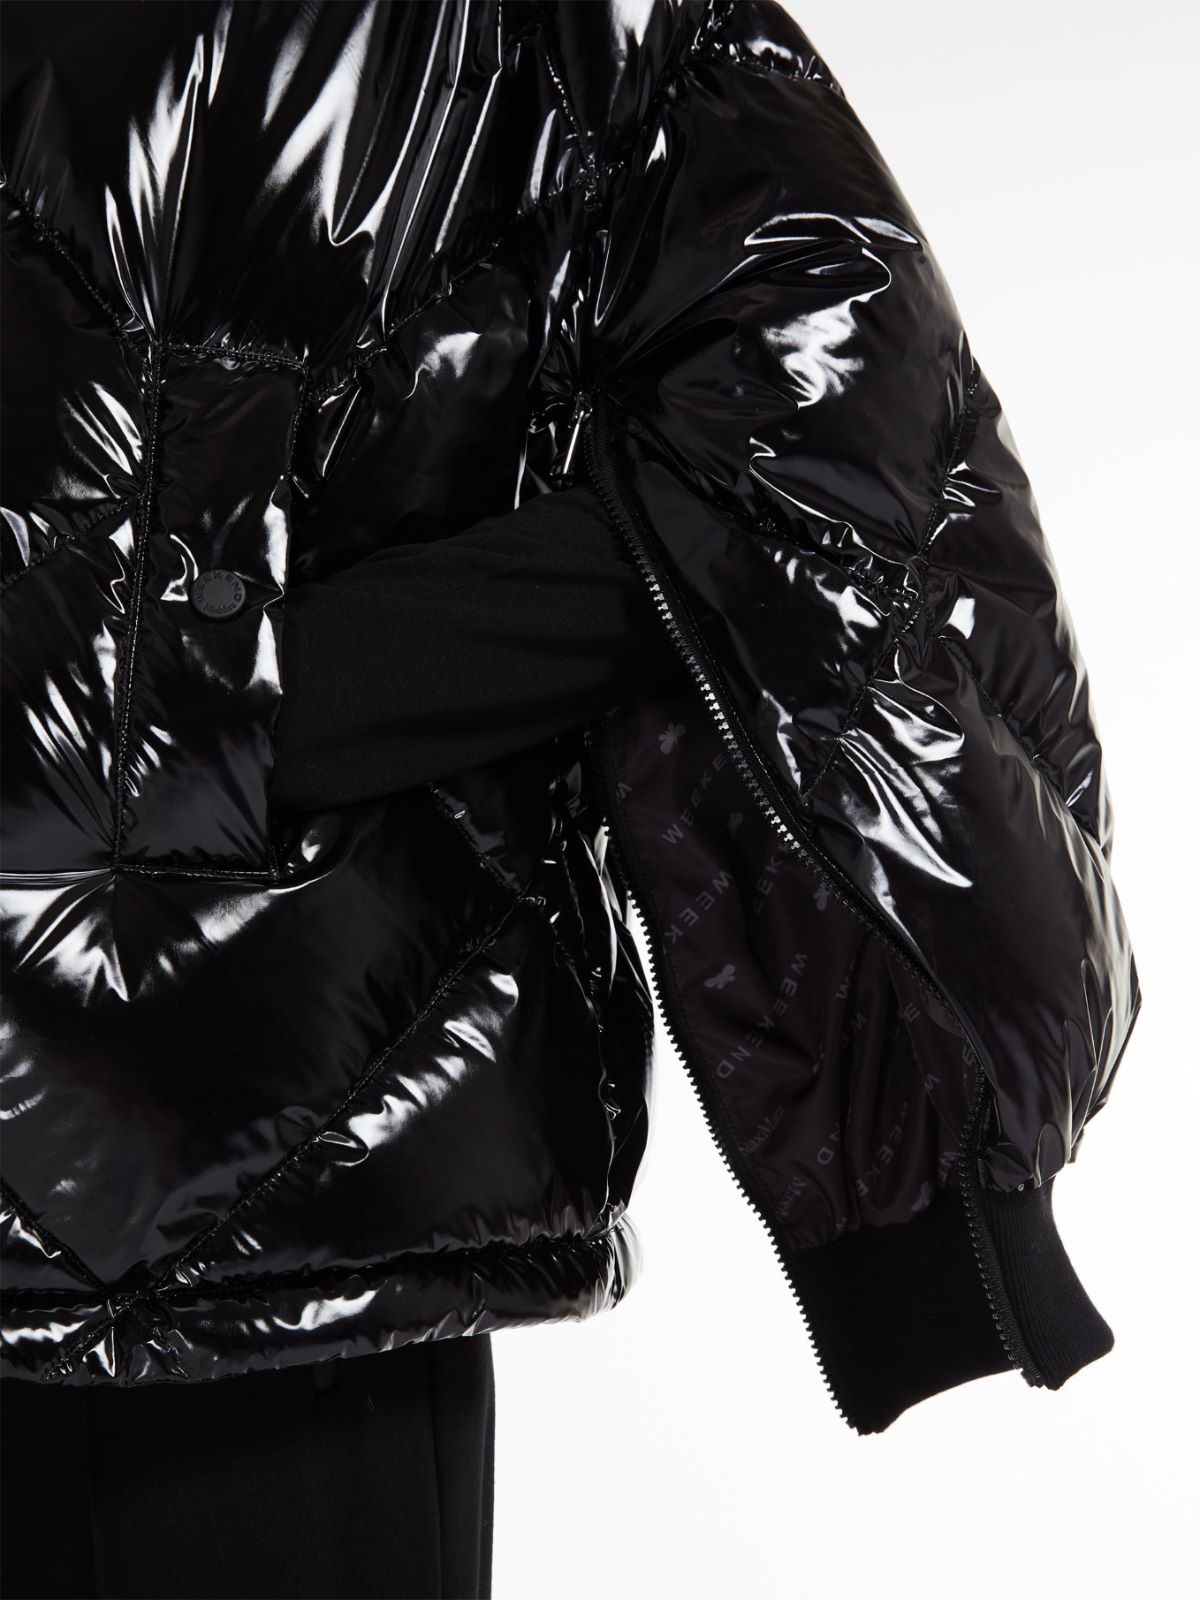 Water-repellent taffeta down jacket, black | Weekend Max Mara